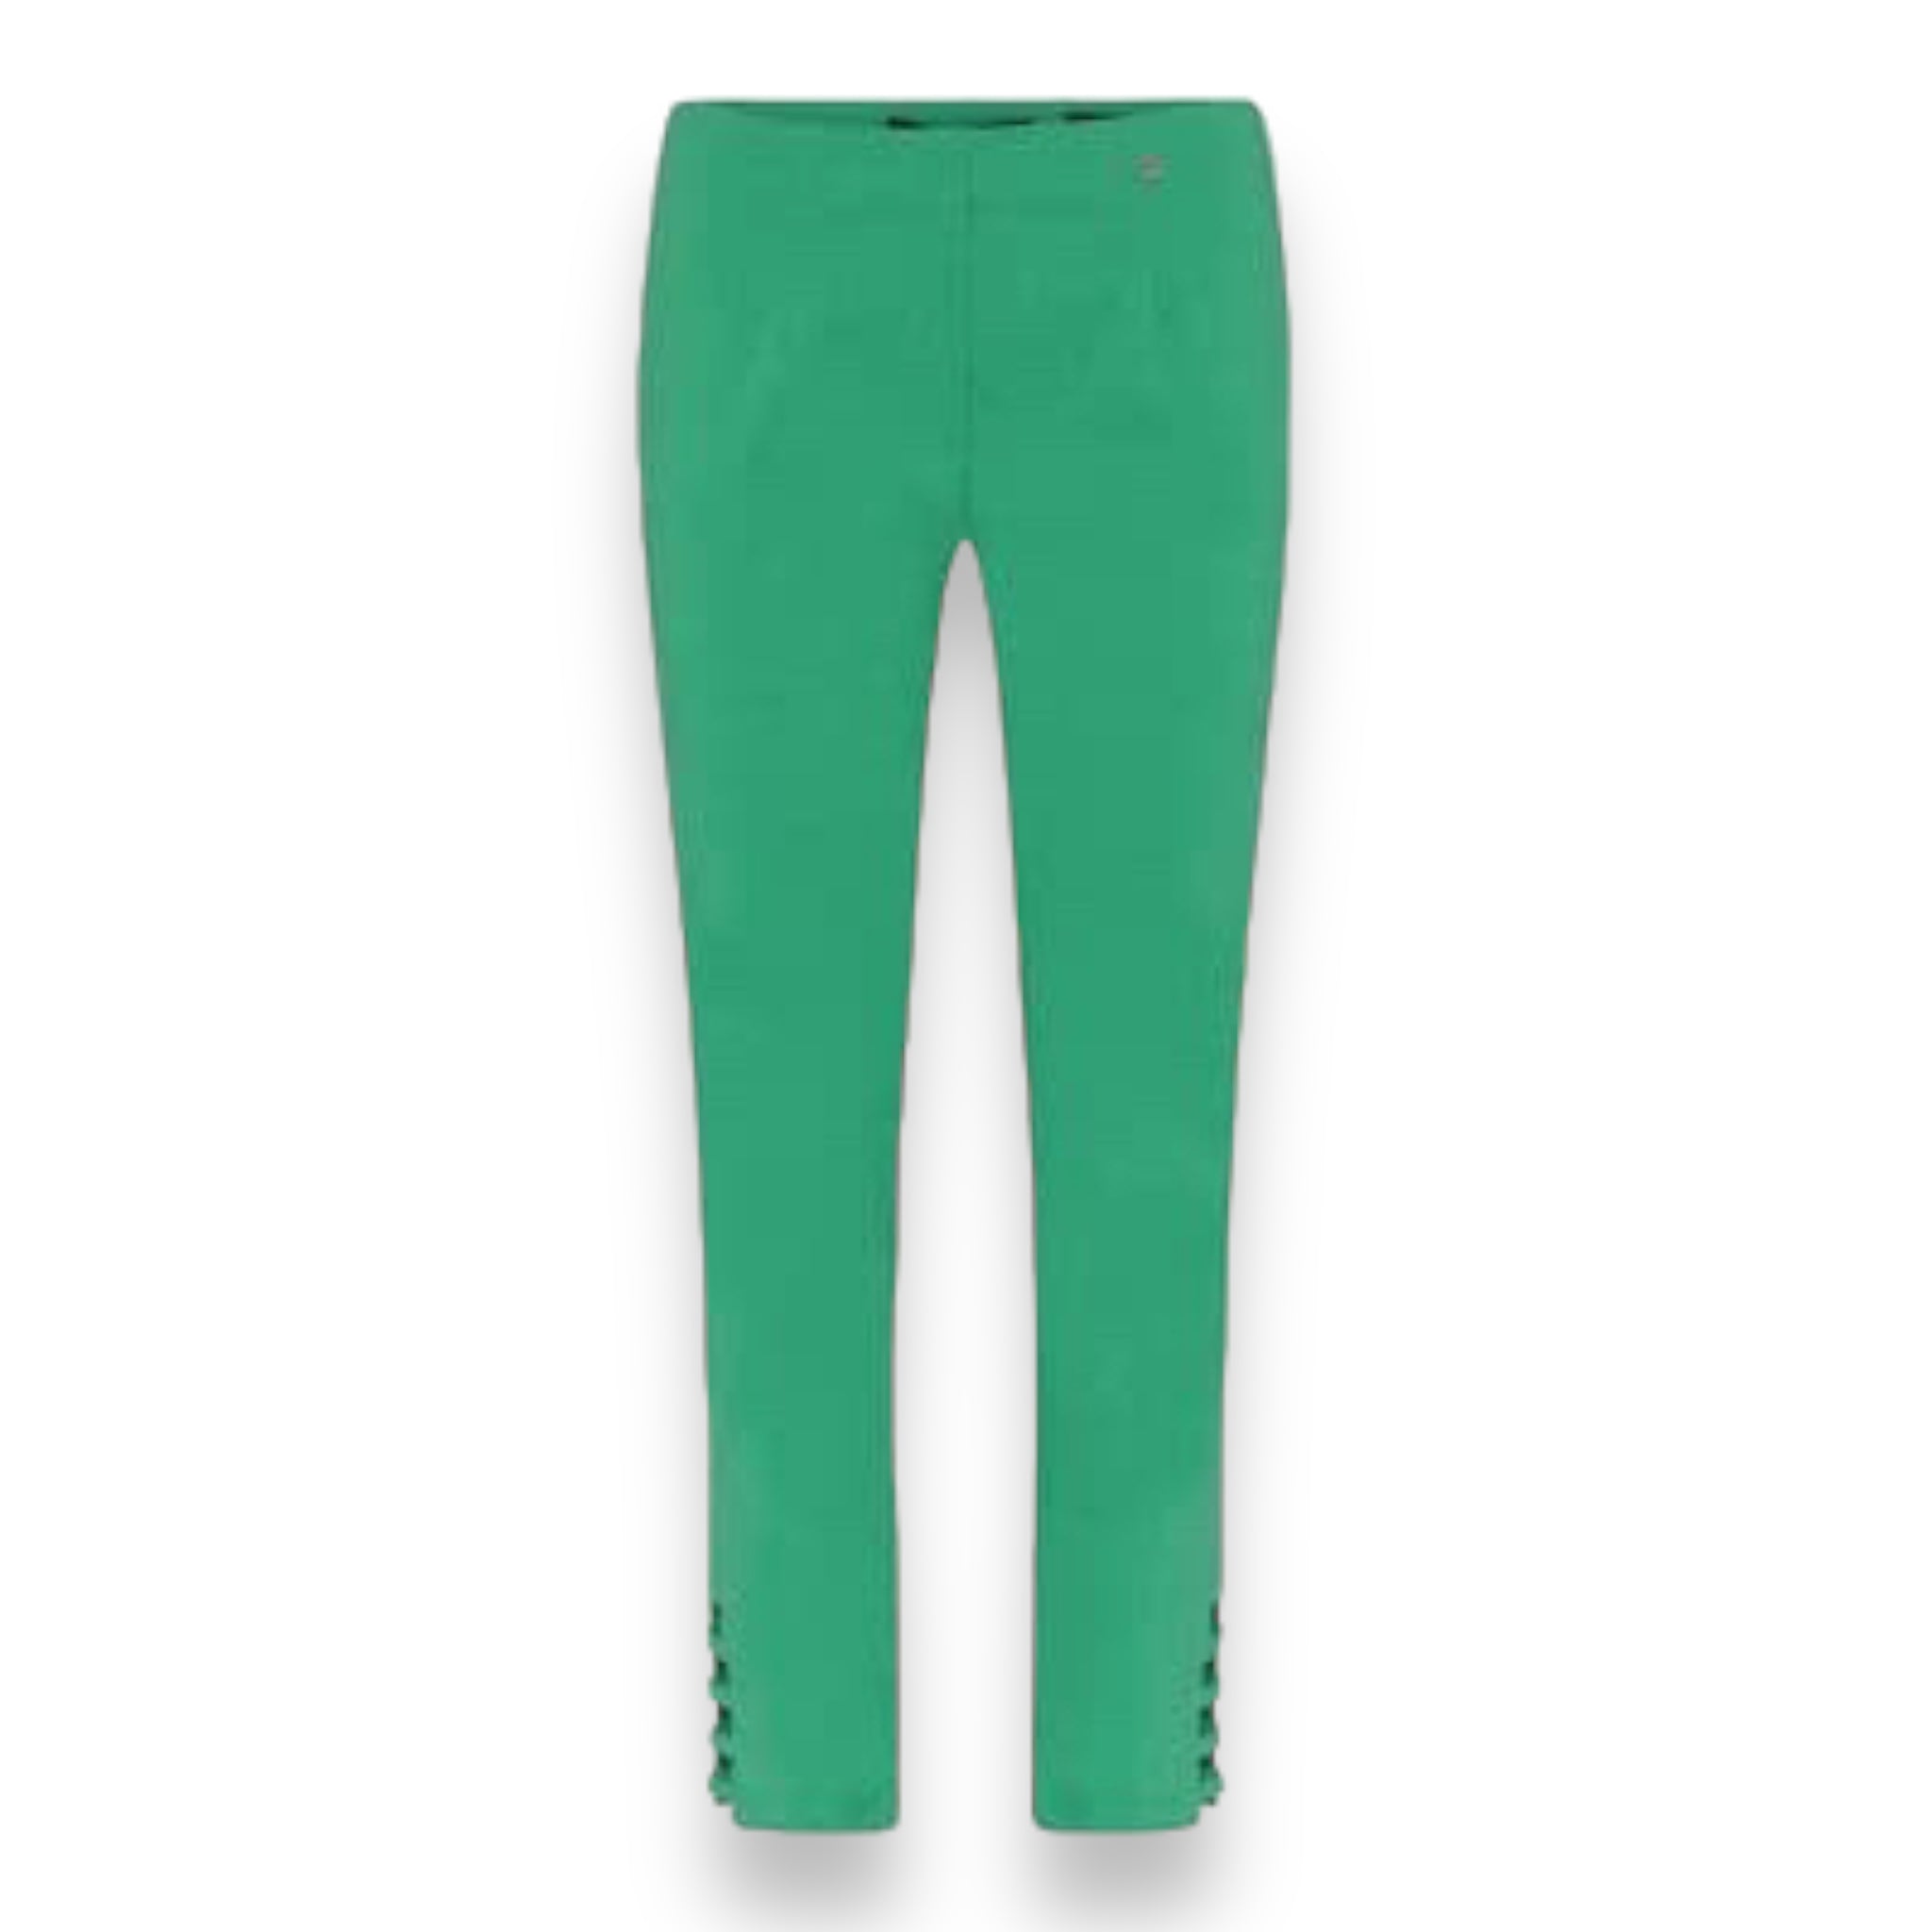 Robell Lena 09 Trousers Green